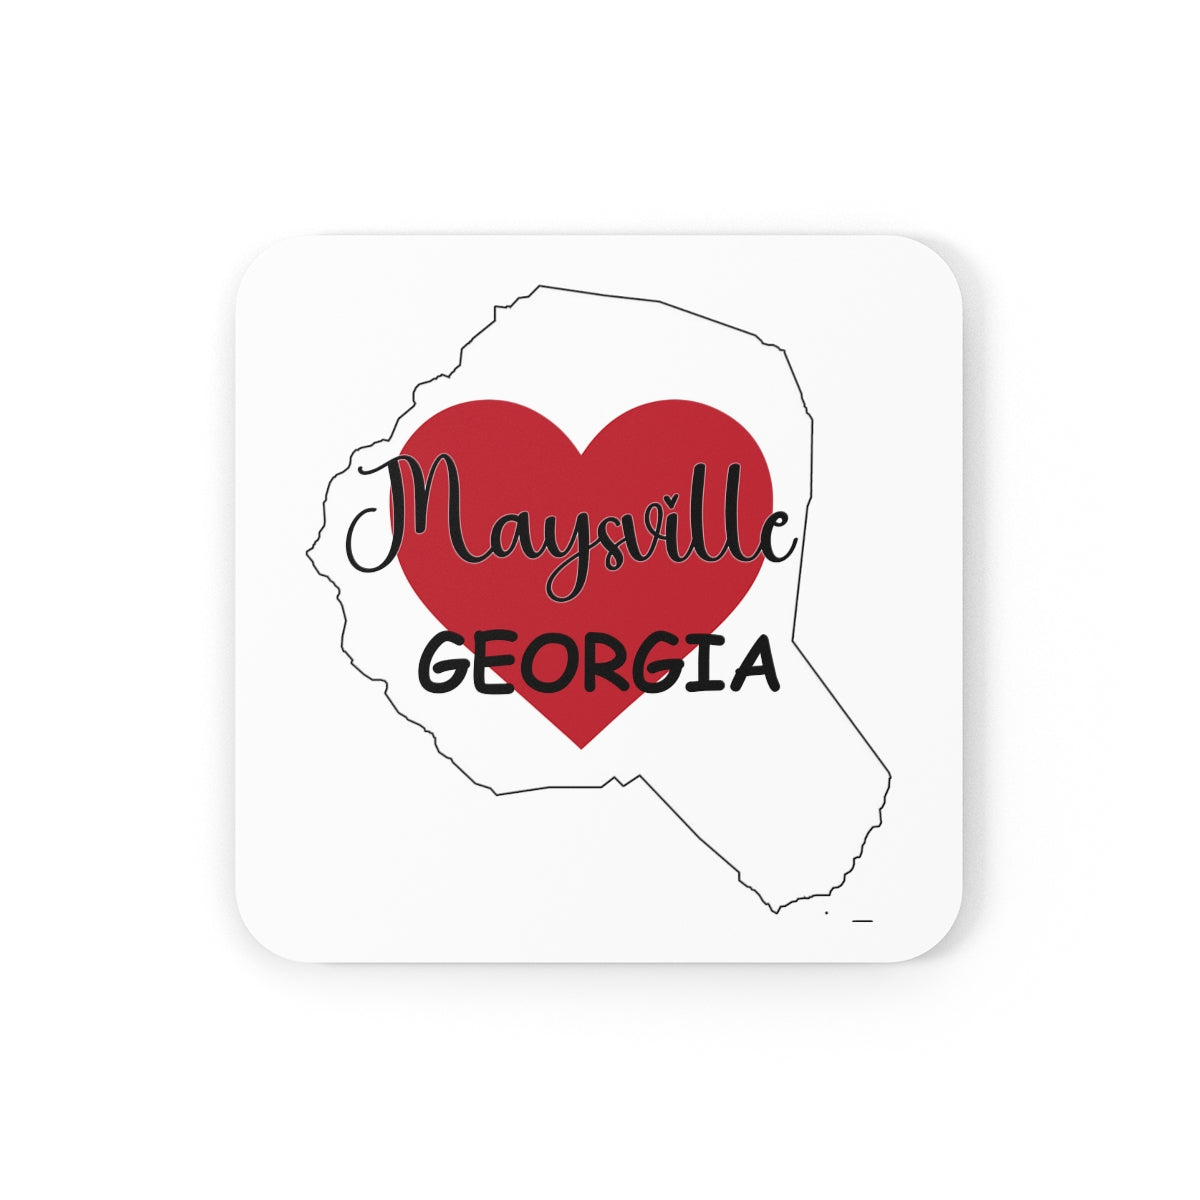 Maysville Georgia Corkwood Coaster Set